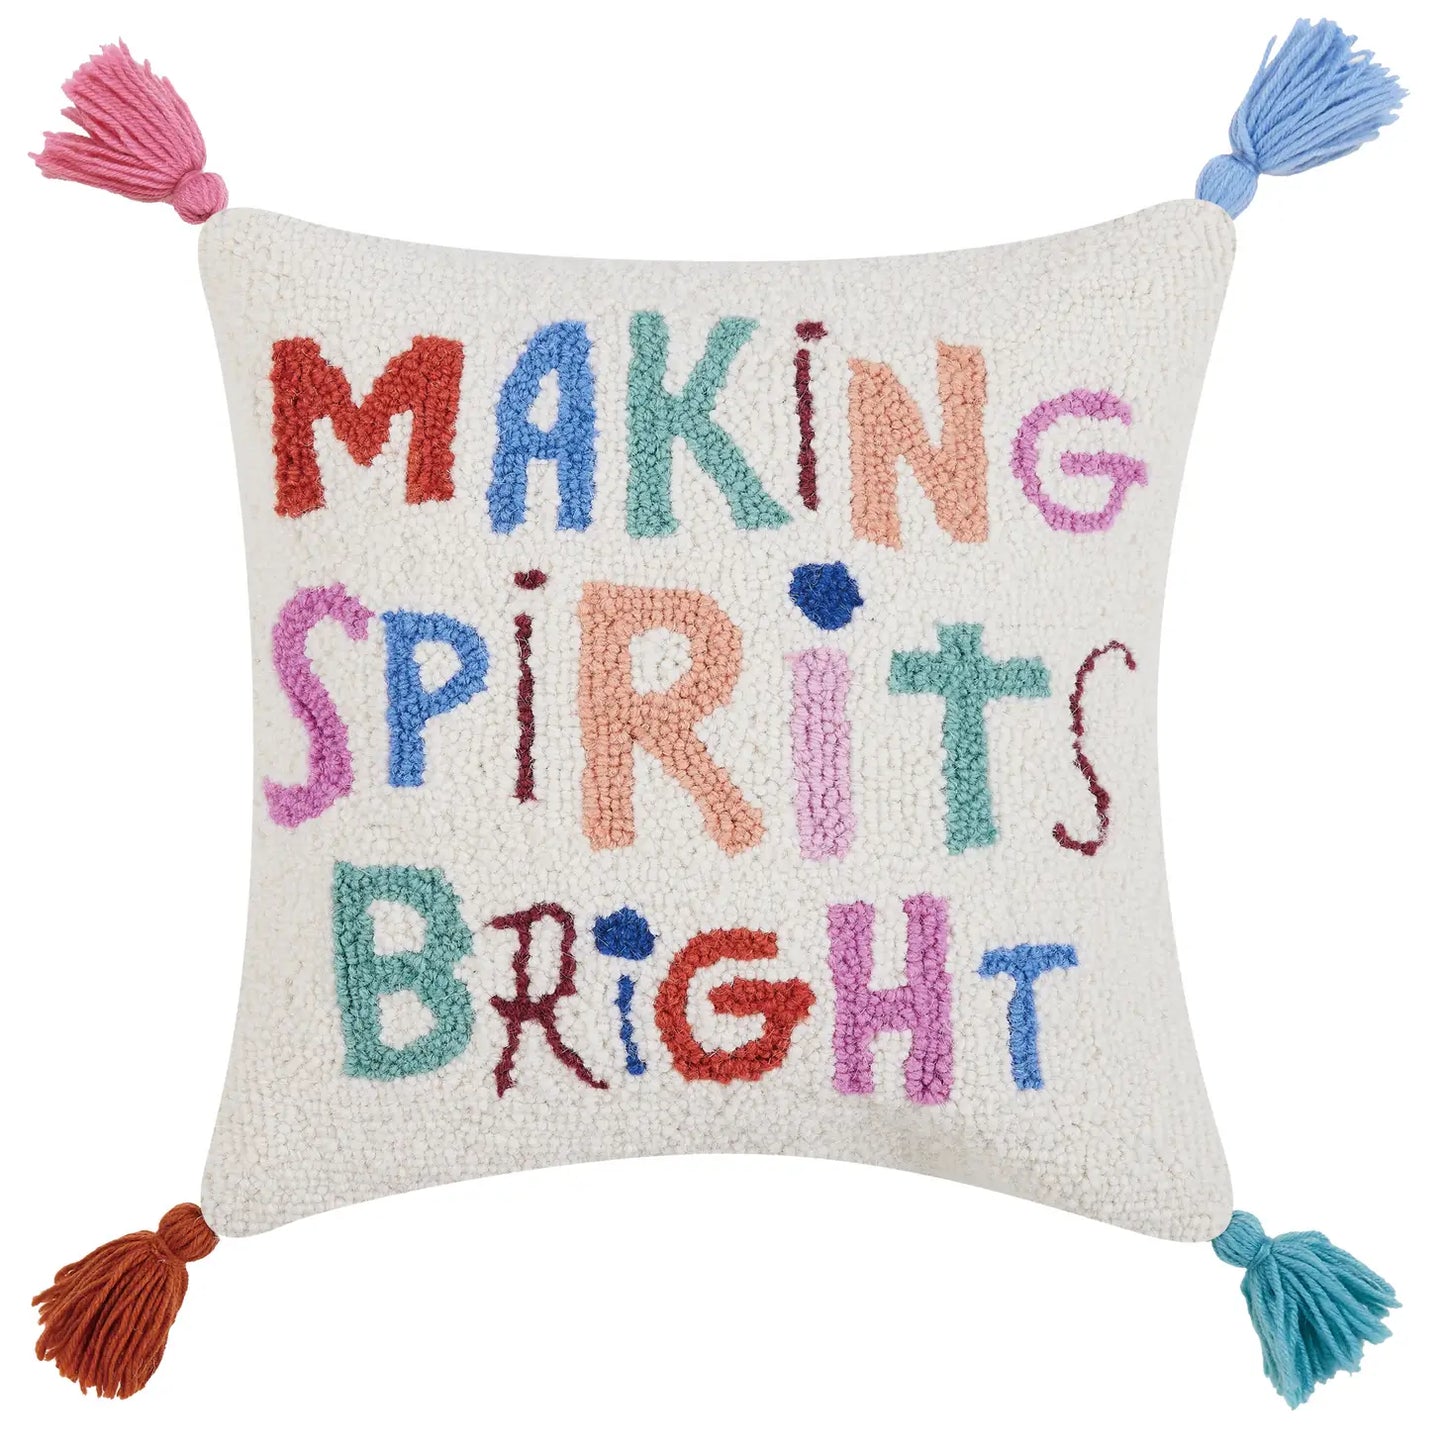 Making Spirits Bright Pillow